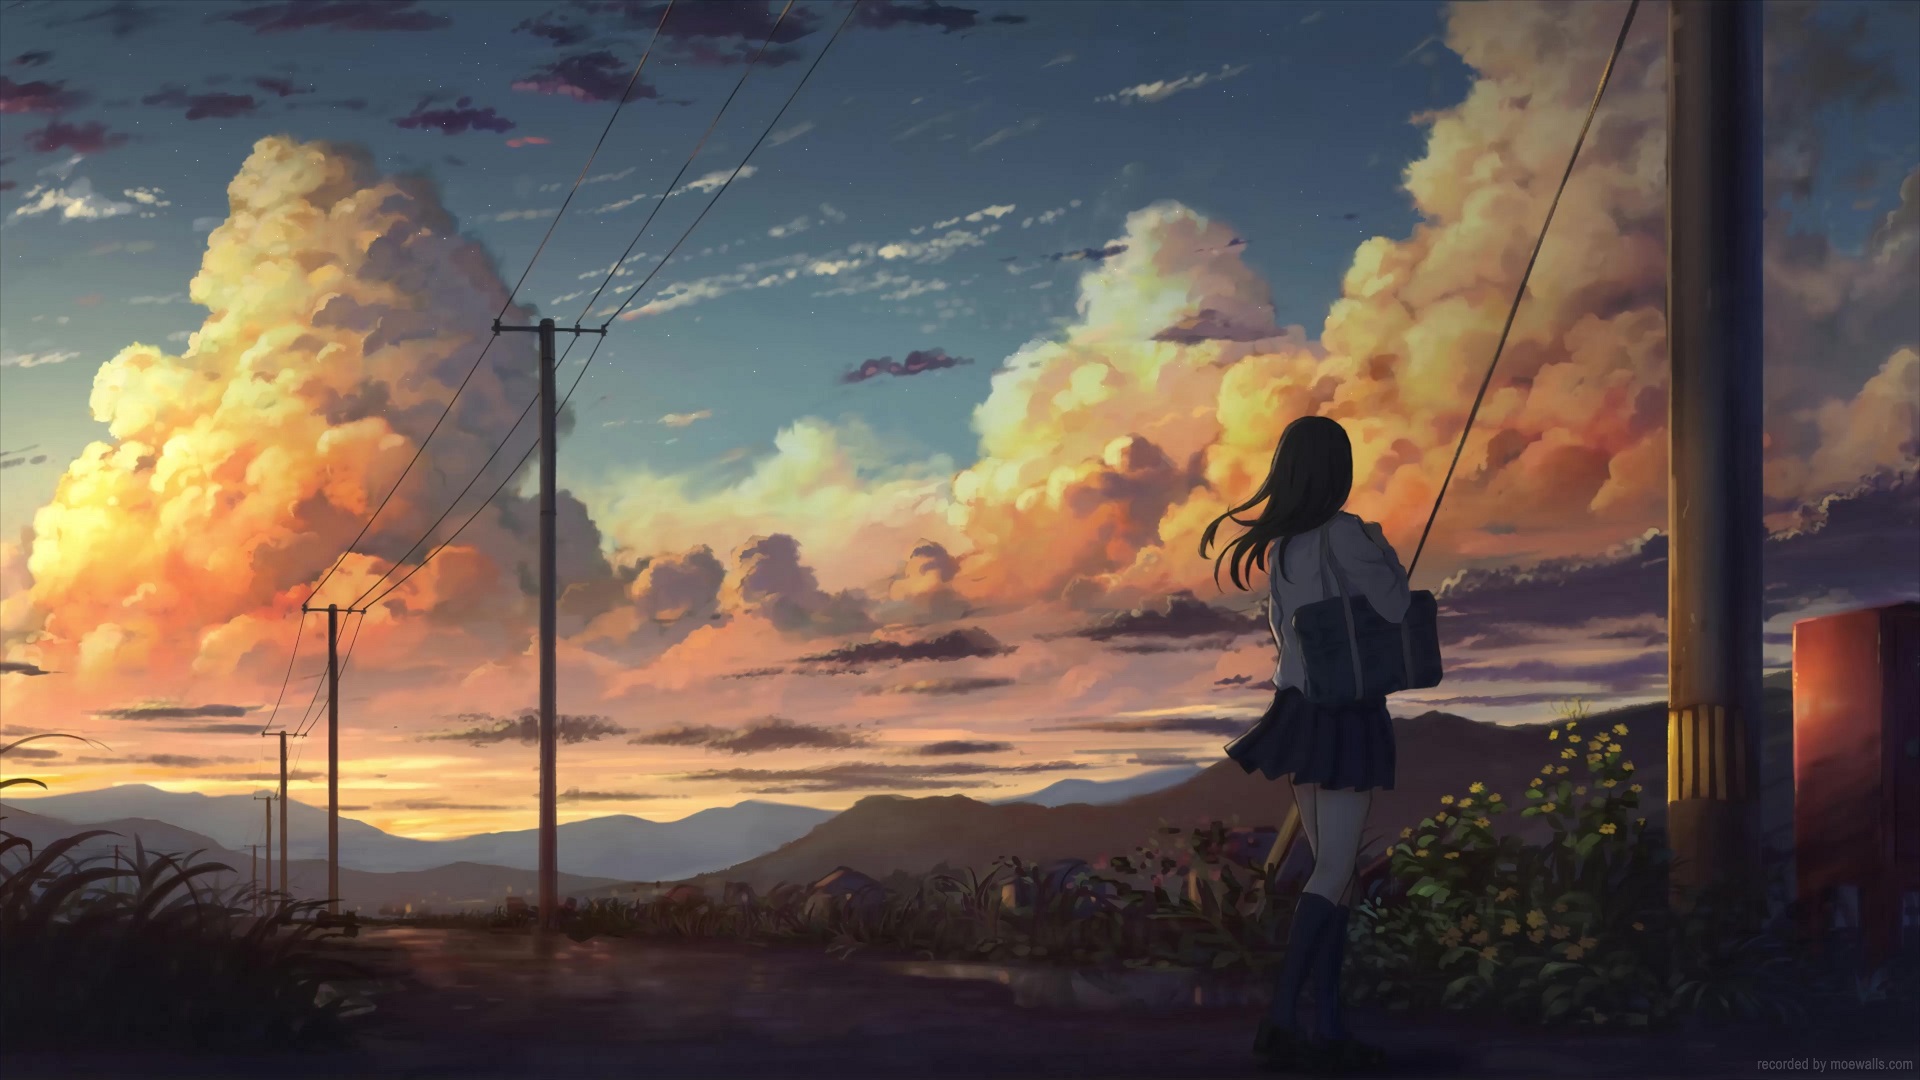 Anime sunset by Kindredpixels on DeviantArt